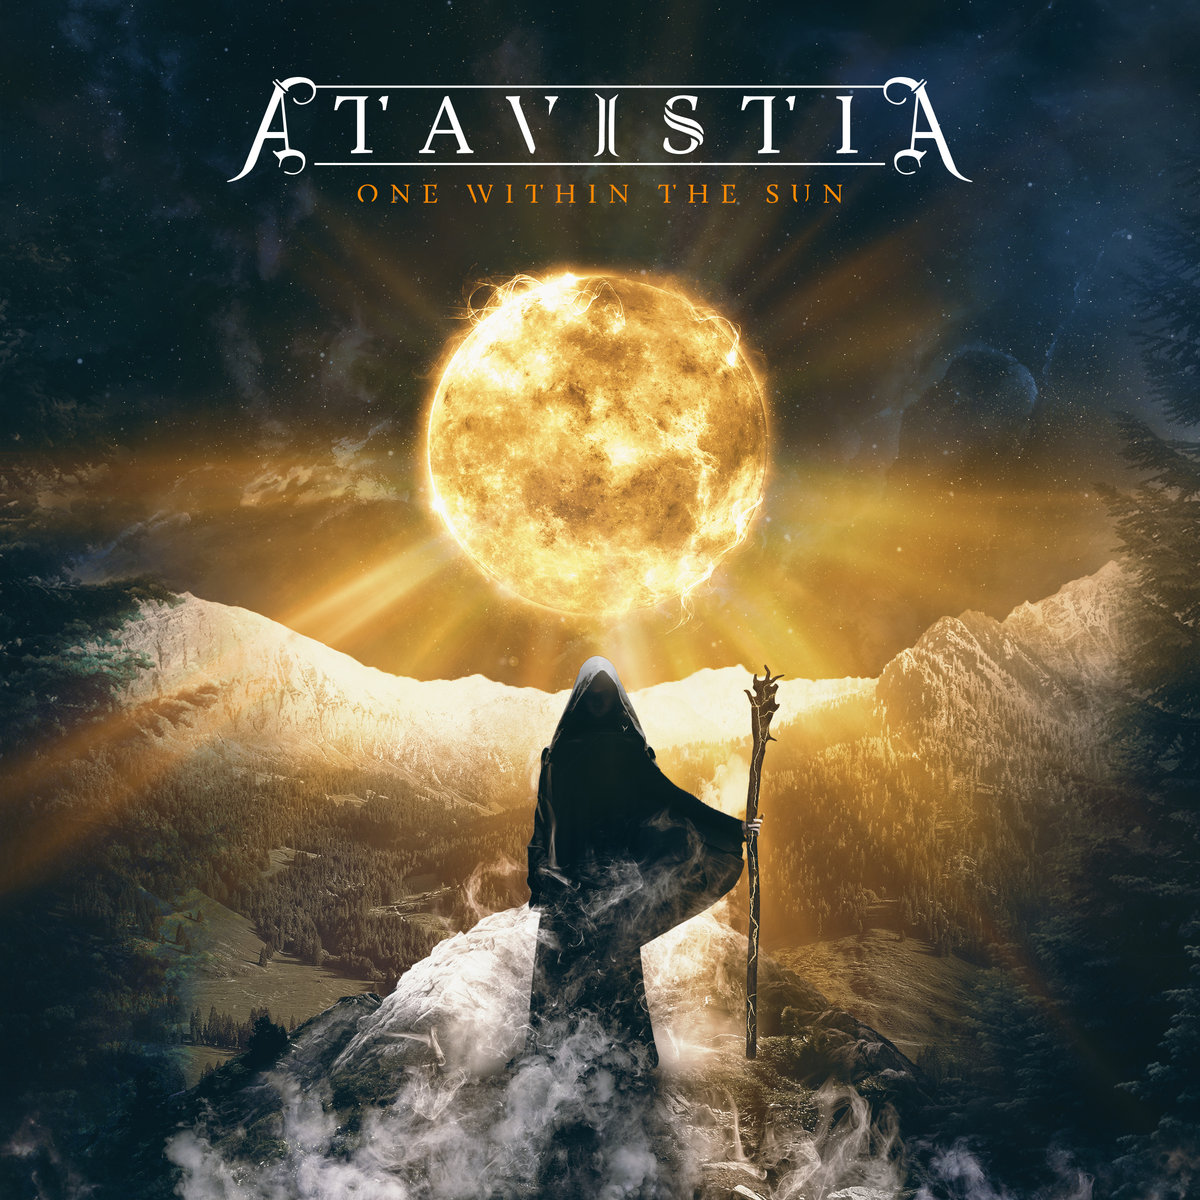 One With The Sun debut album by Atavistia